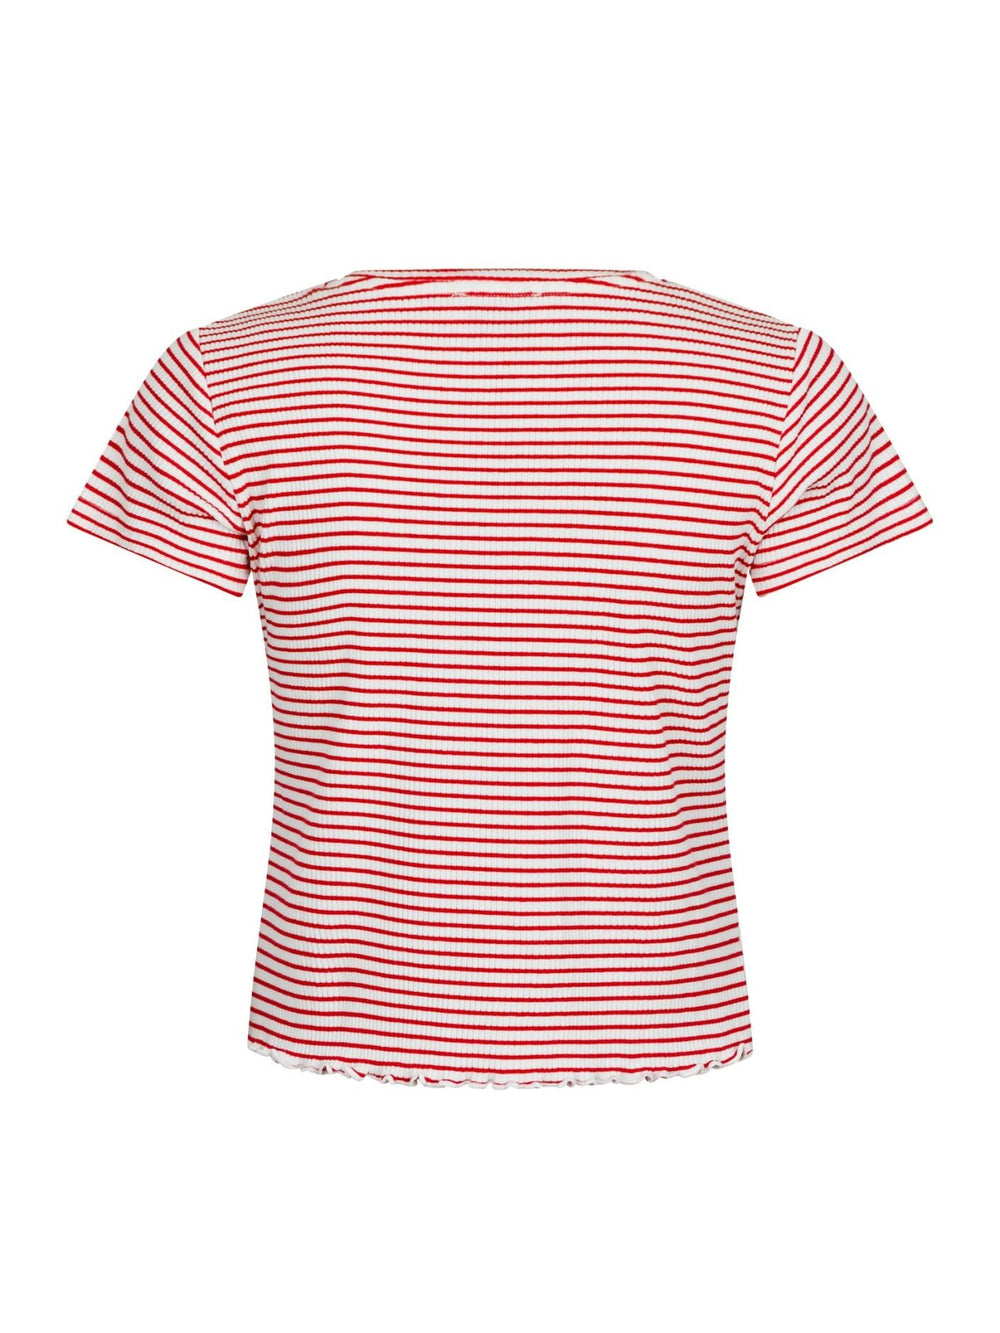 Forudbestilling - Neo Noir - Lonnie Stripe Tee - Red T-shirts 